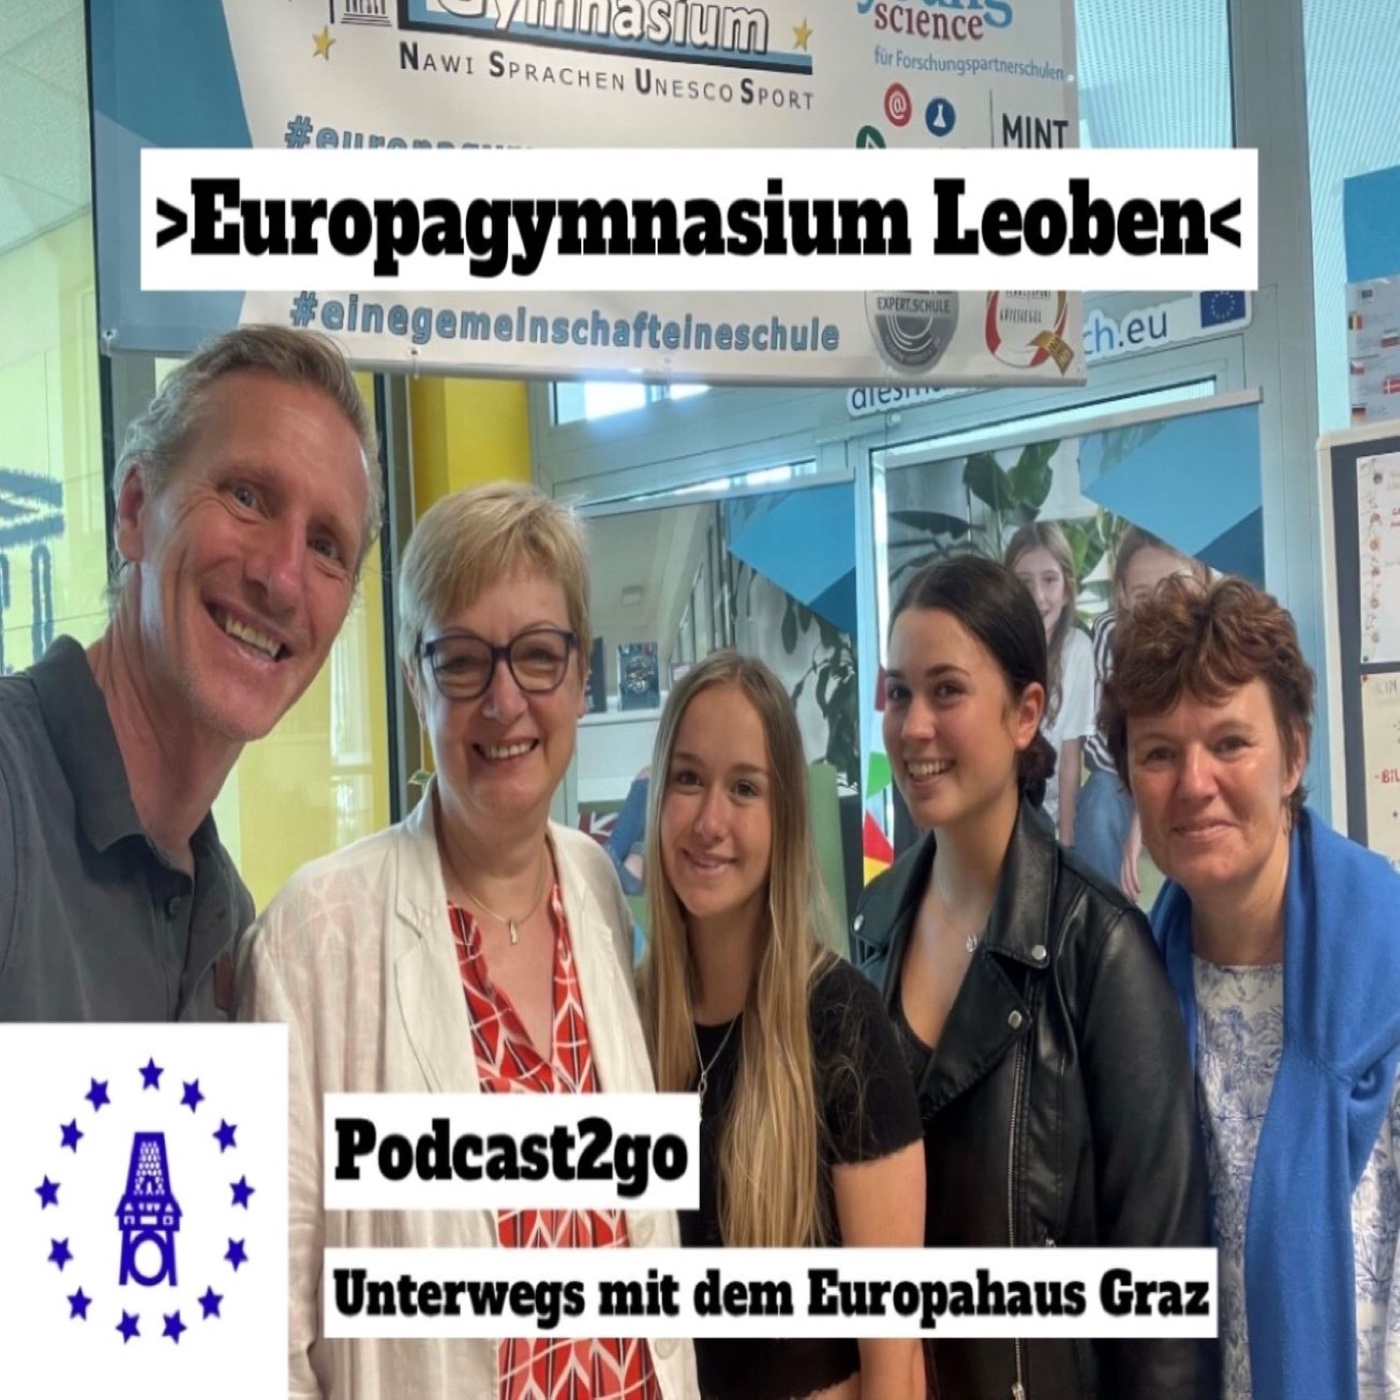 Podcast2go - Europagymnasium Leoben